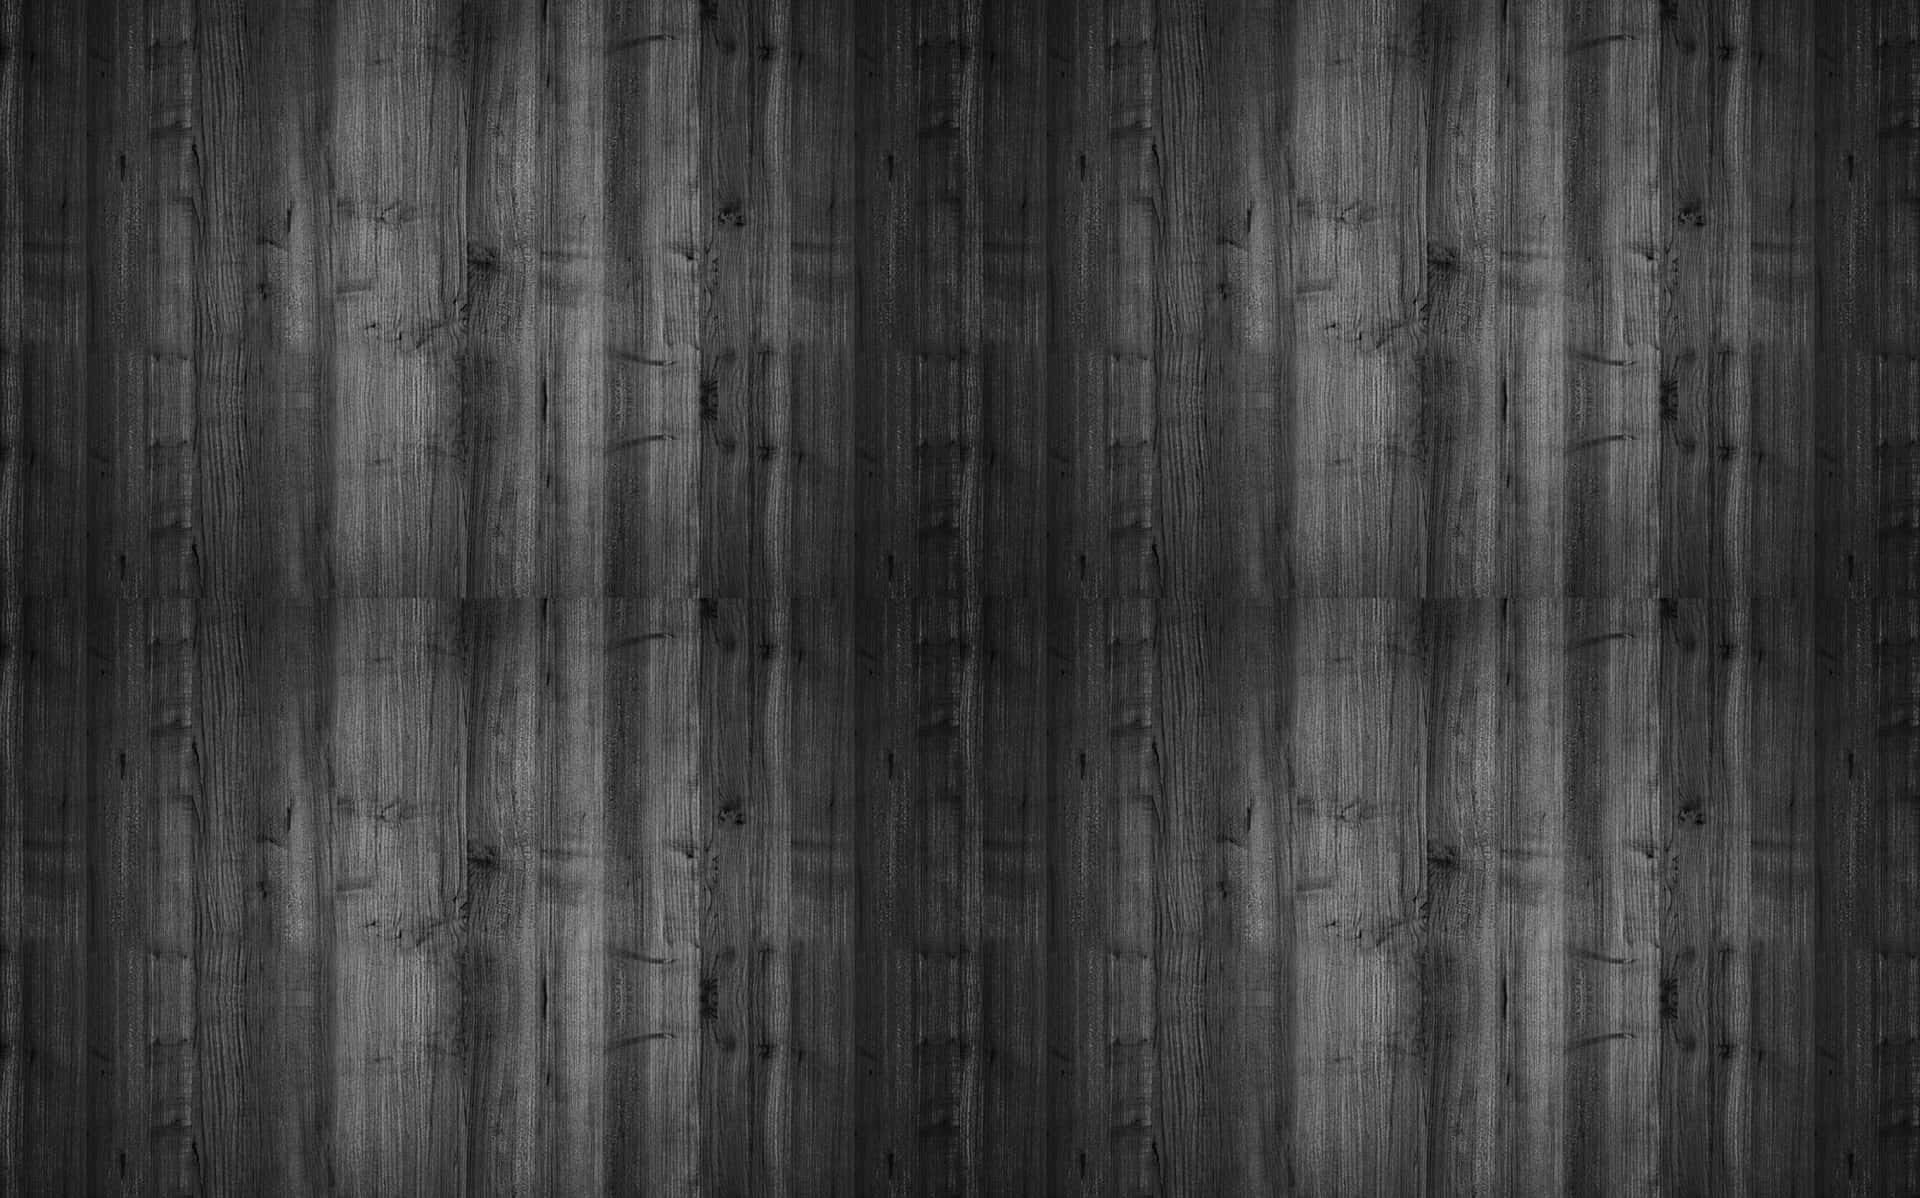 Black Wood Background With A Dark Background